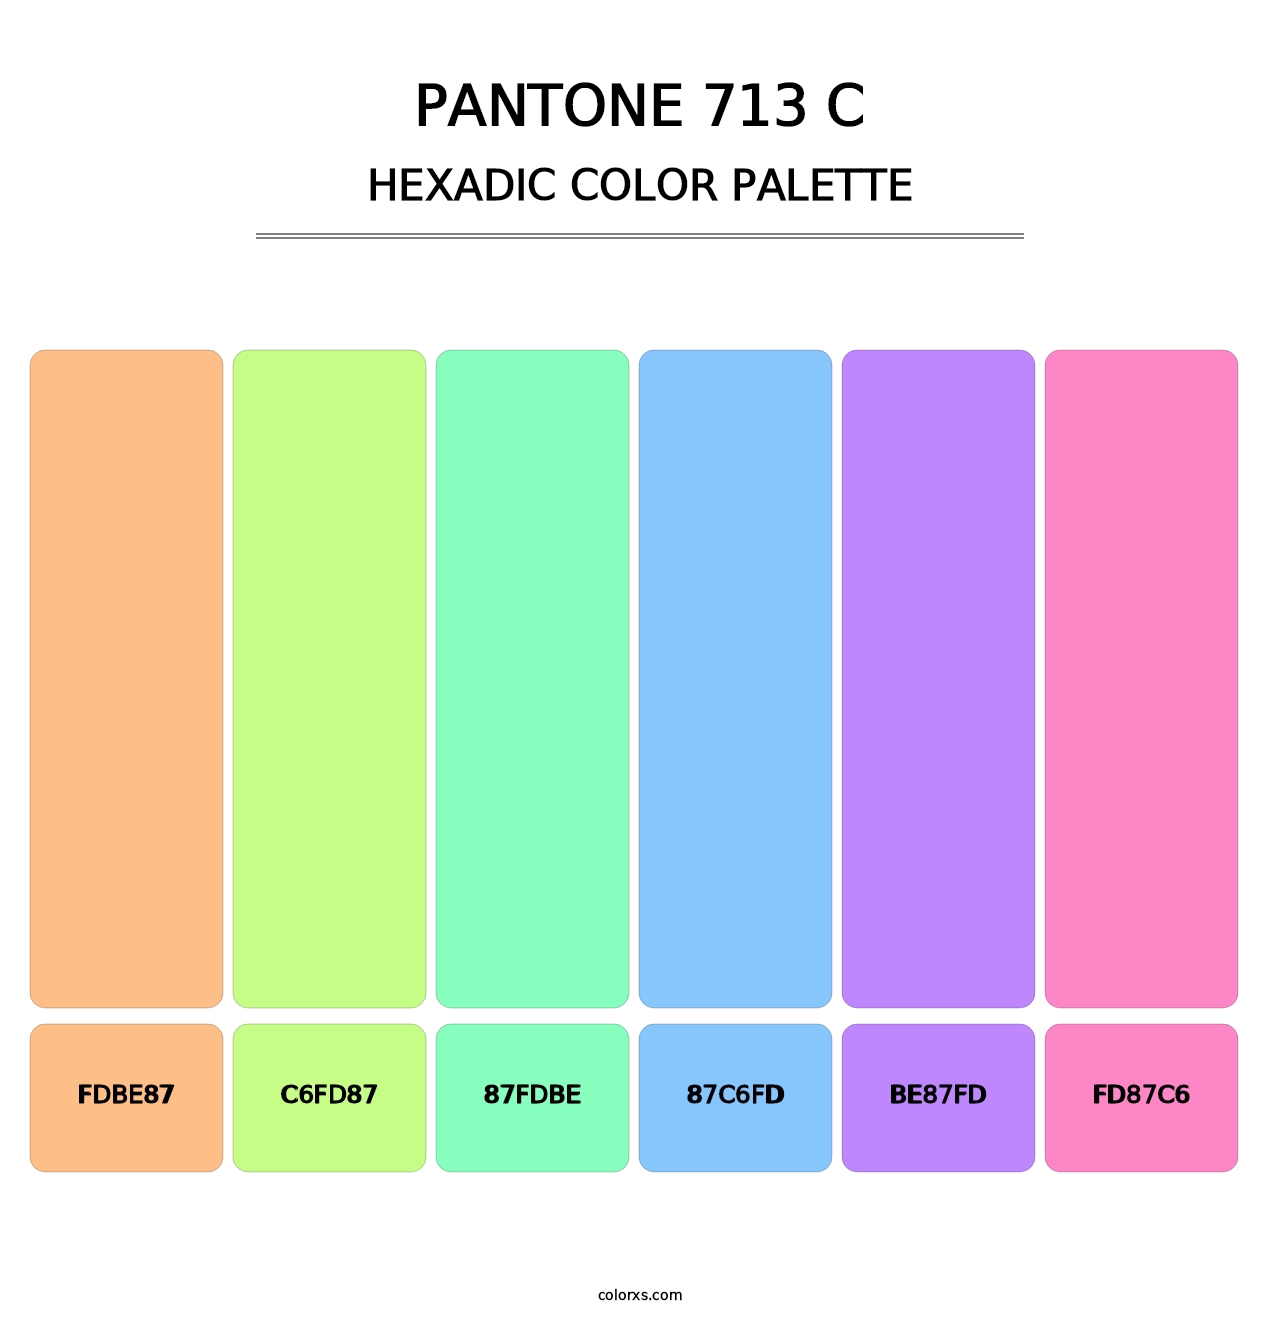 PANTONE 713 C - Hexadic Color Palette